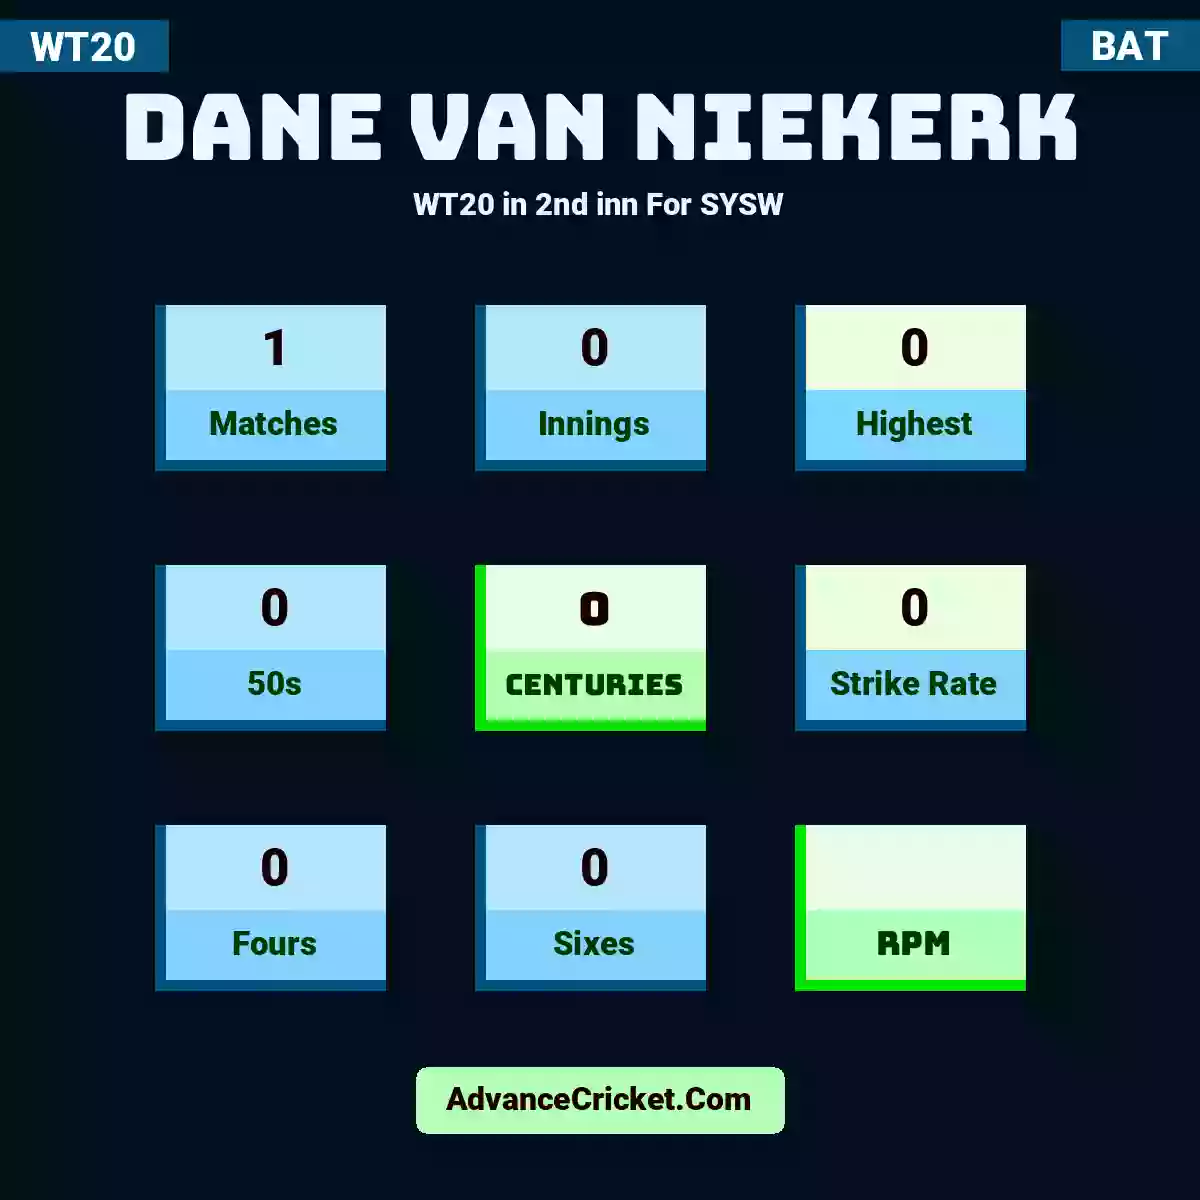 Dane van Niekerk WT20  in 2nd inn For SYSW, Dane van Niekerk played 1 matches, scored 0 runs as highest, 0 half-centuries, and 0 centuries, with a strike rate of 0. D.Niekerk hit 0 fours and 0 sixes.